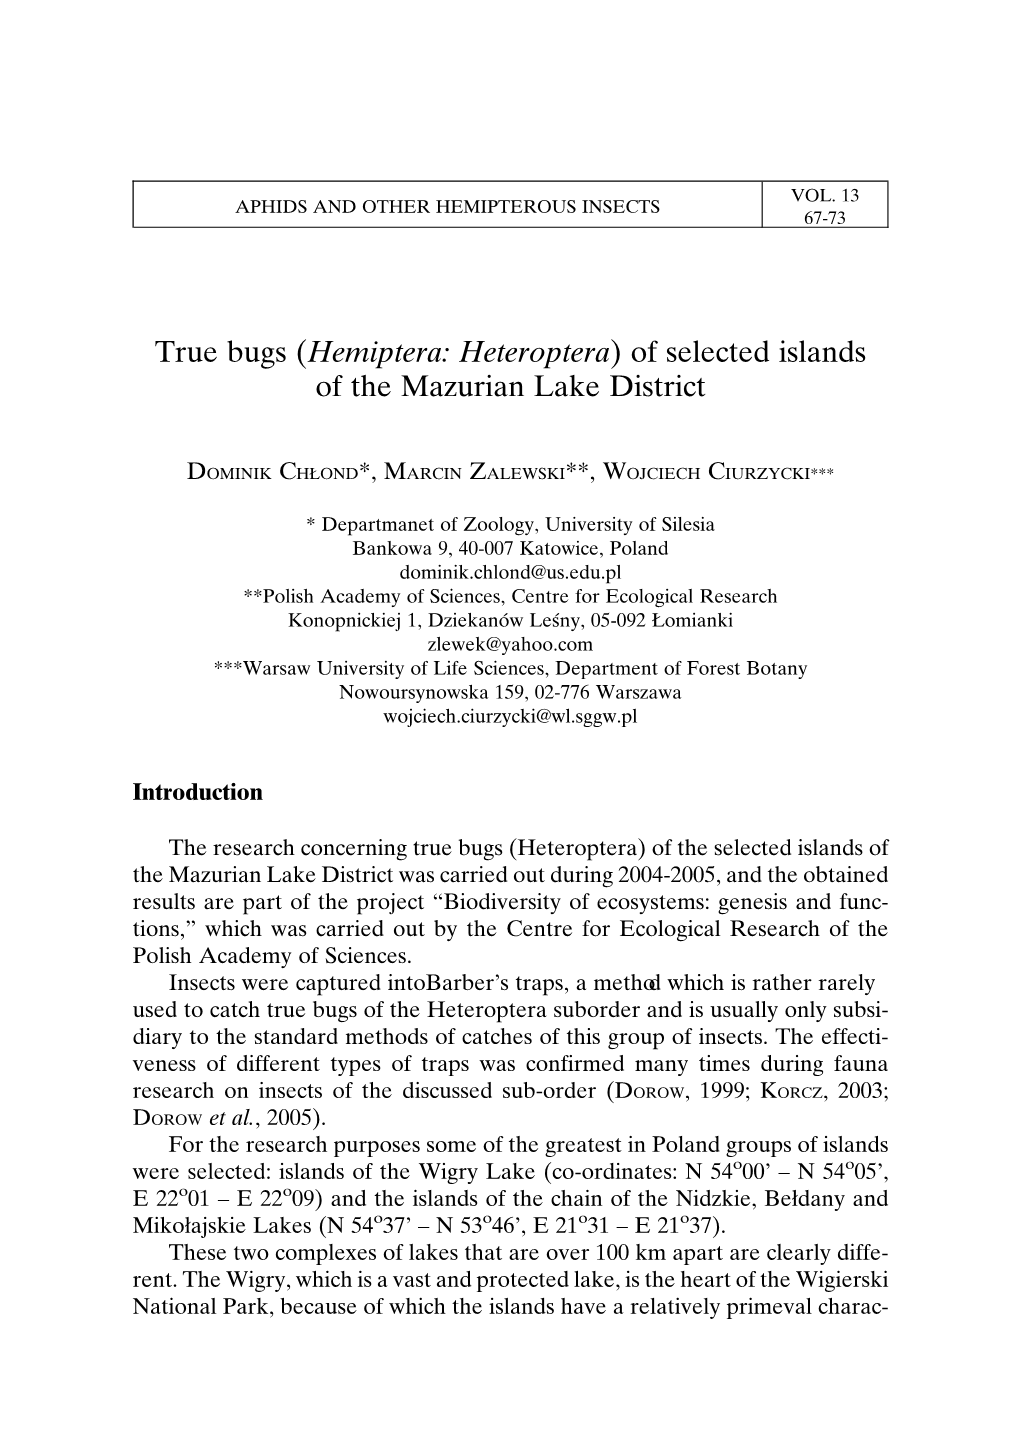 True Bugs (Hemiptera: Heteroptera) of Selected Islands of the Mazurian Lake District